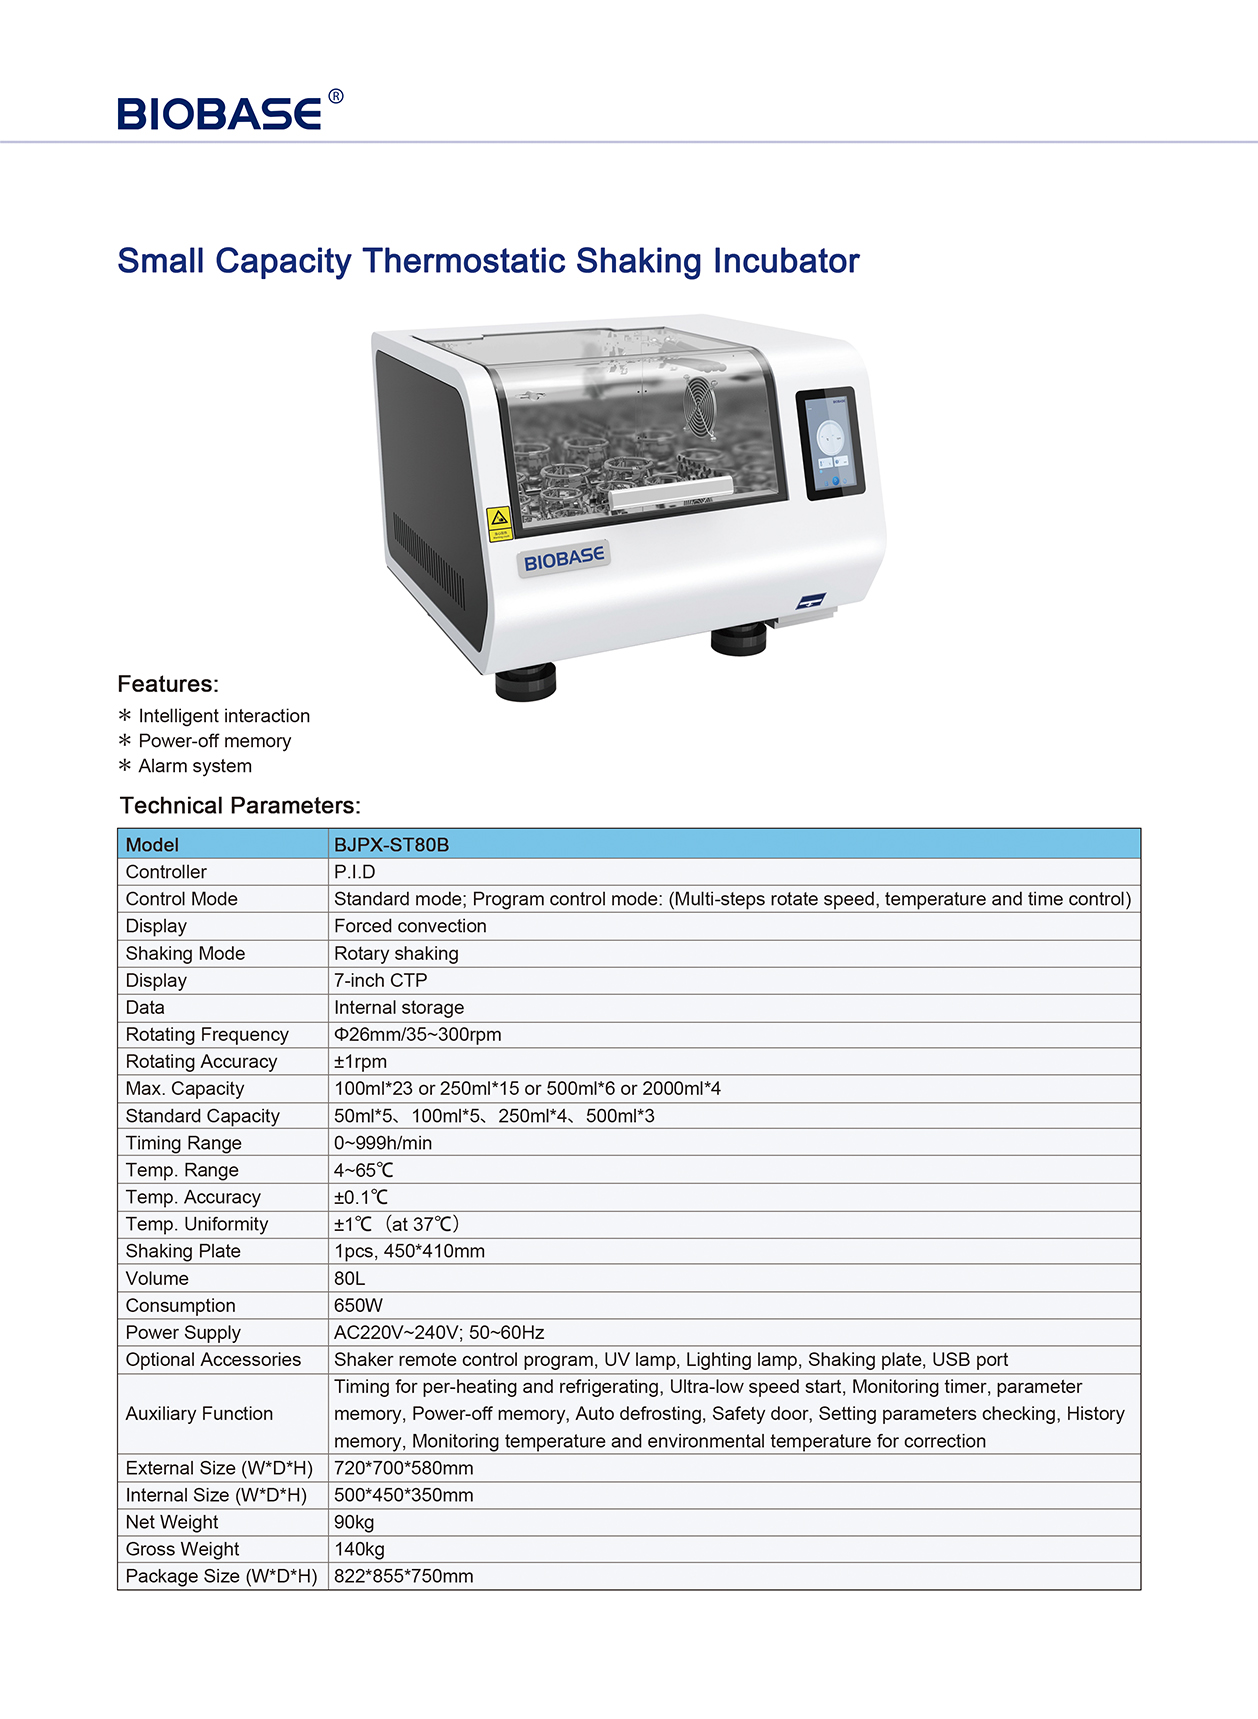 Small Capacity Thermostatic Shaking Incubator BJPX-ST80B